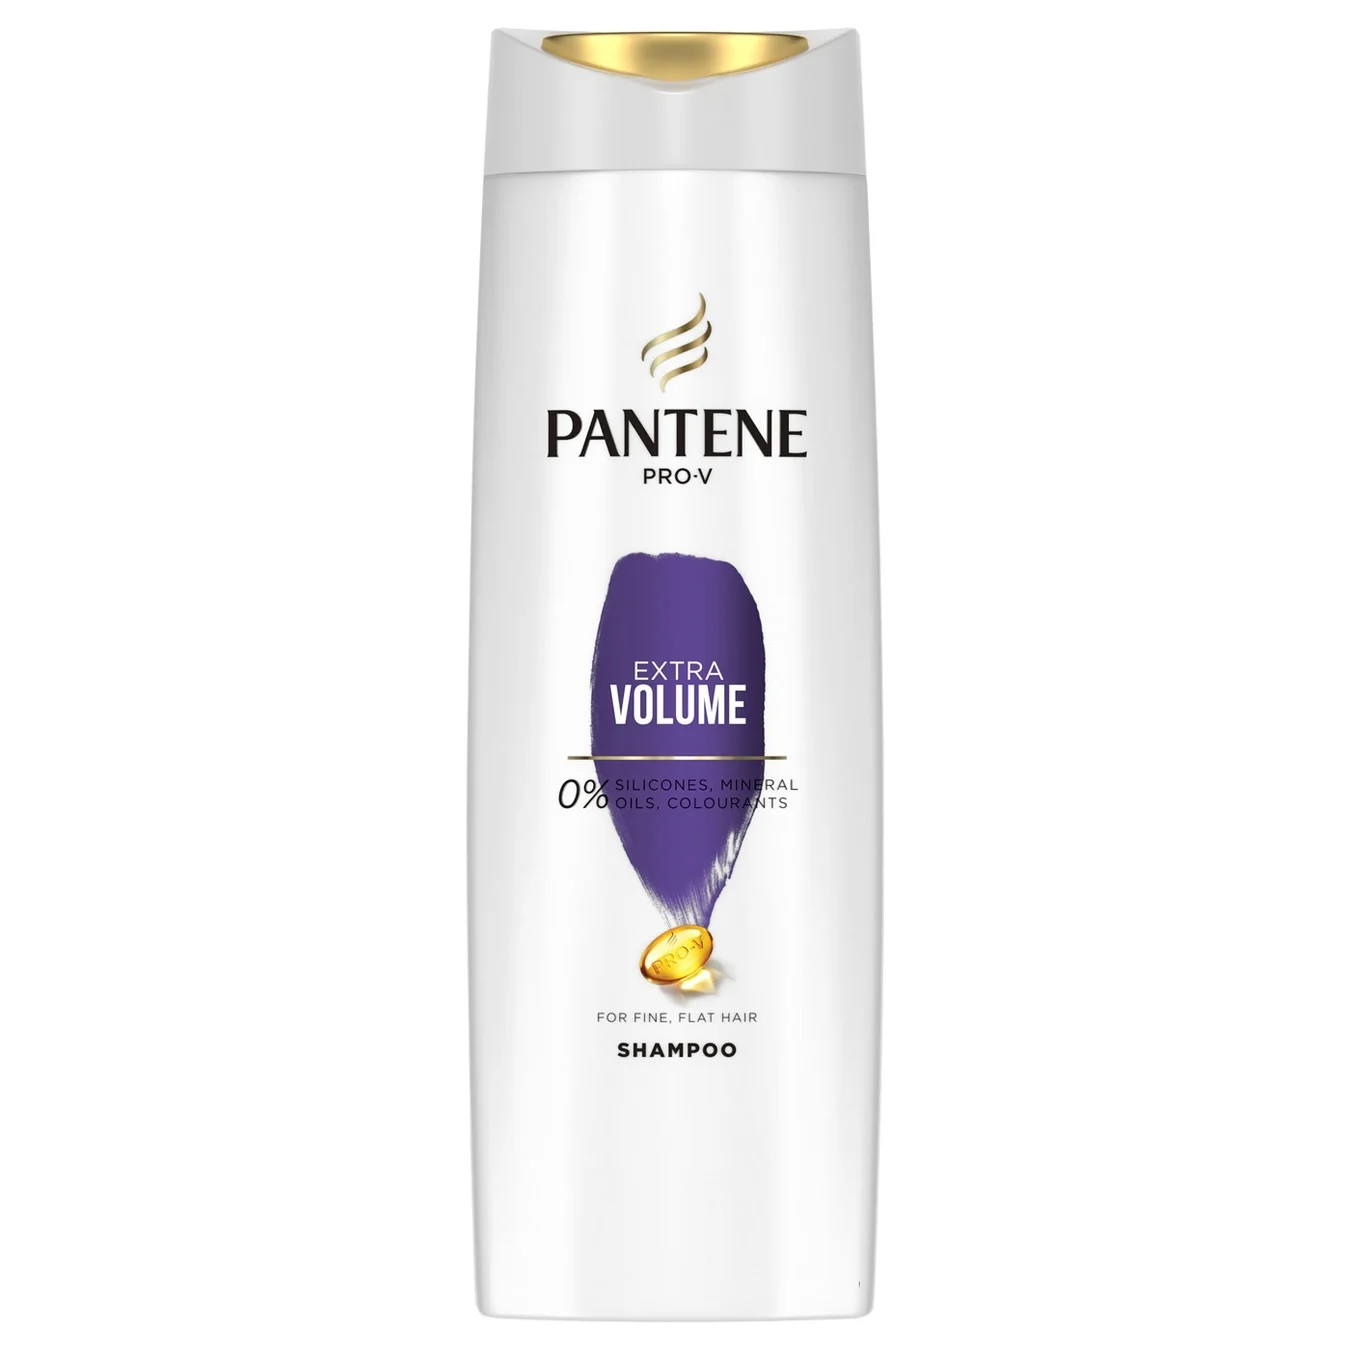 Shampoo Pantene additional volume 400 ml